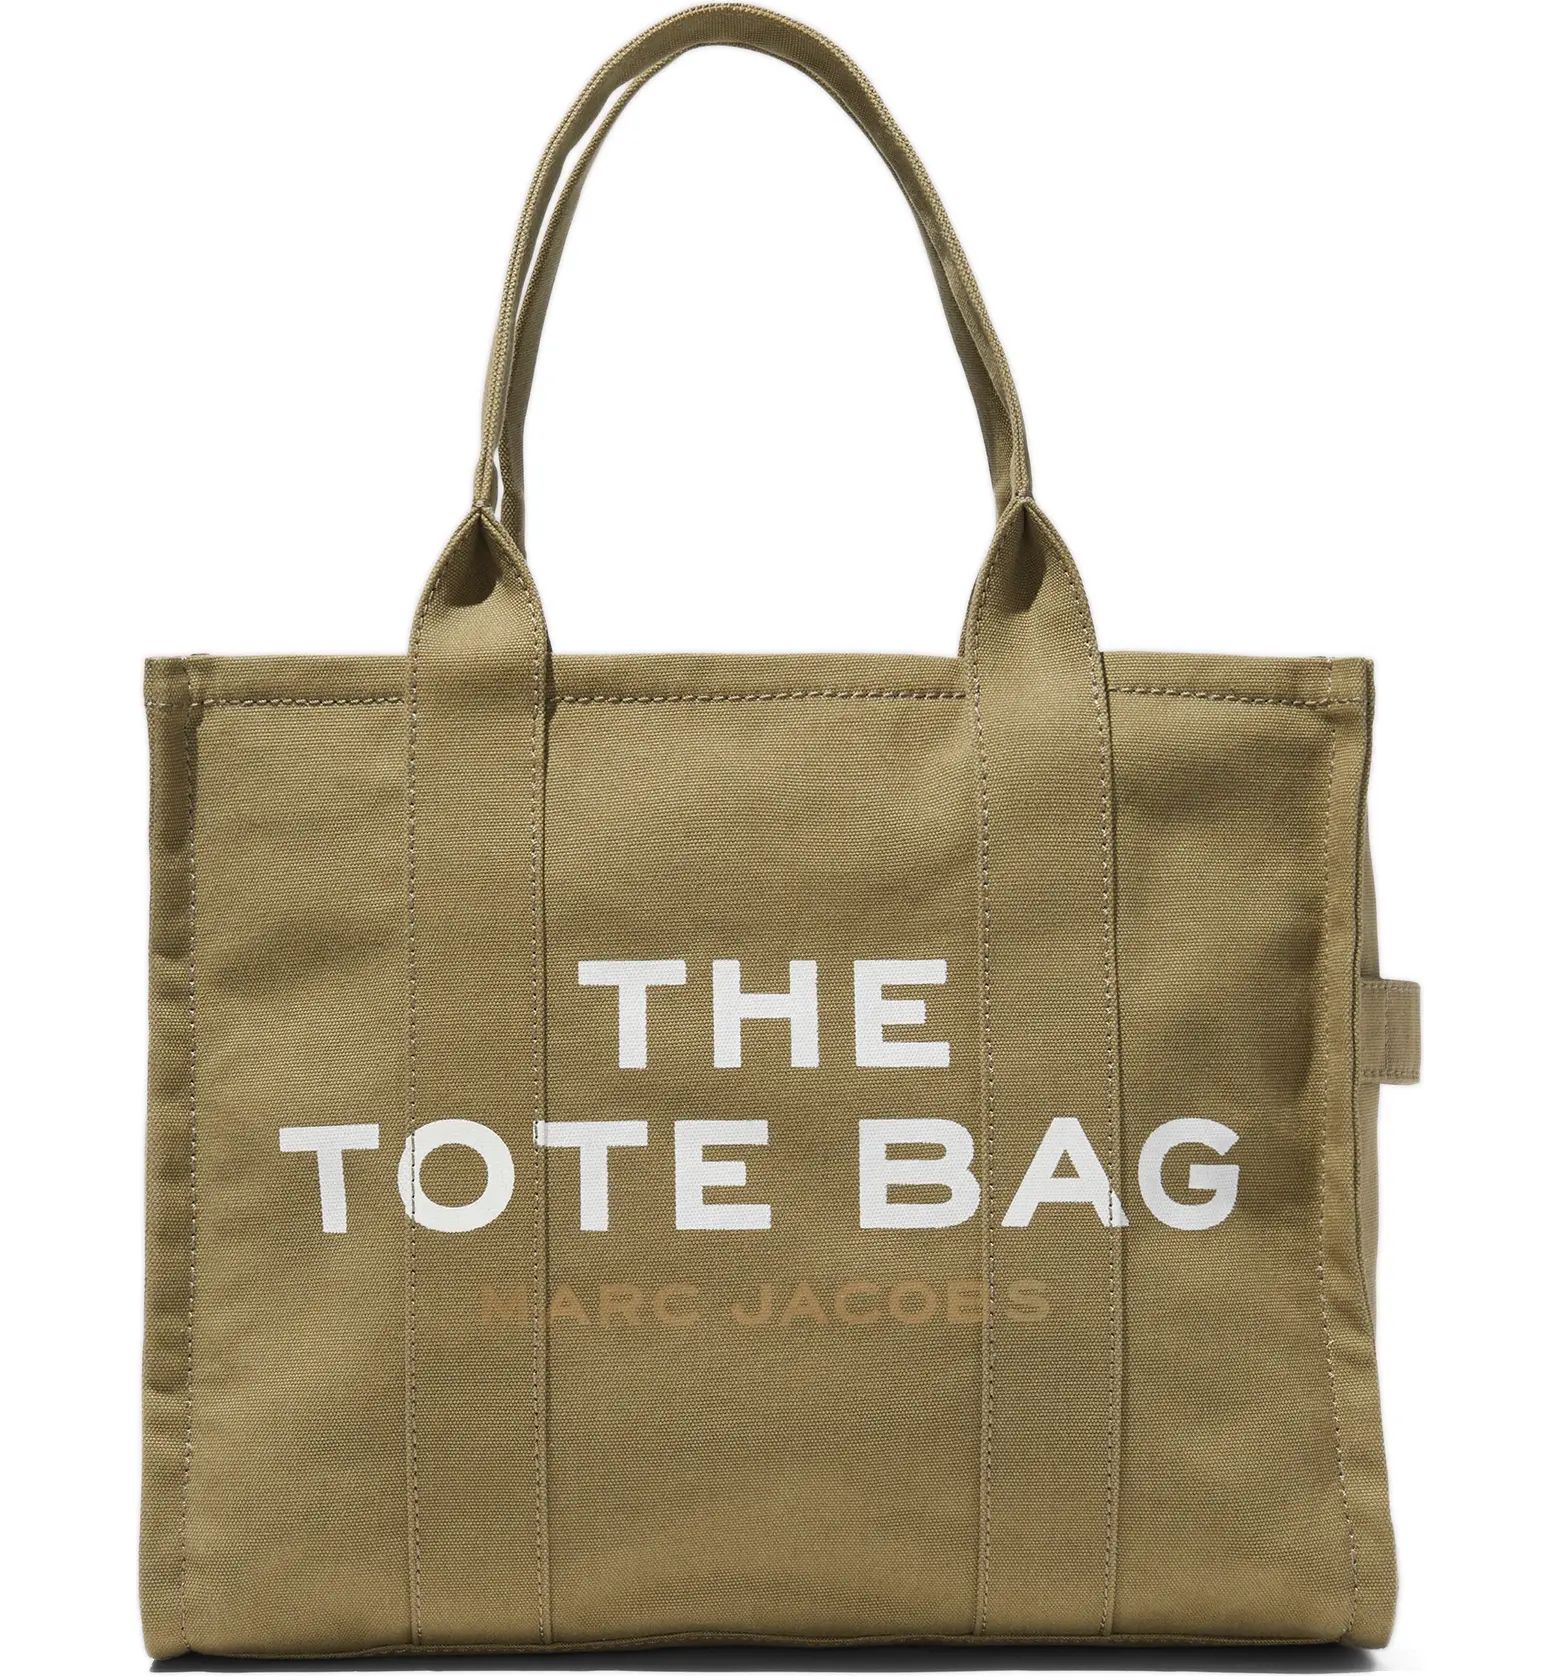 Marc Jacobs The Tote Bag | Nordstrom | Nordstrom